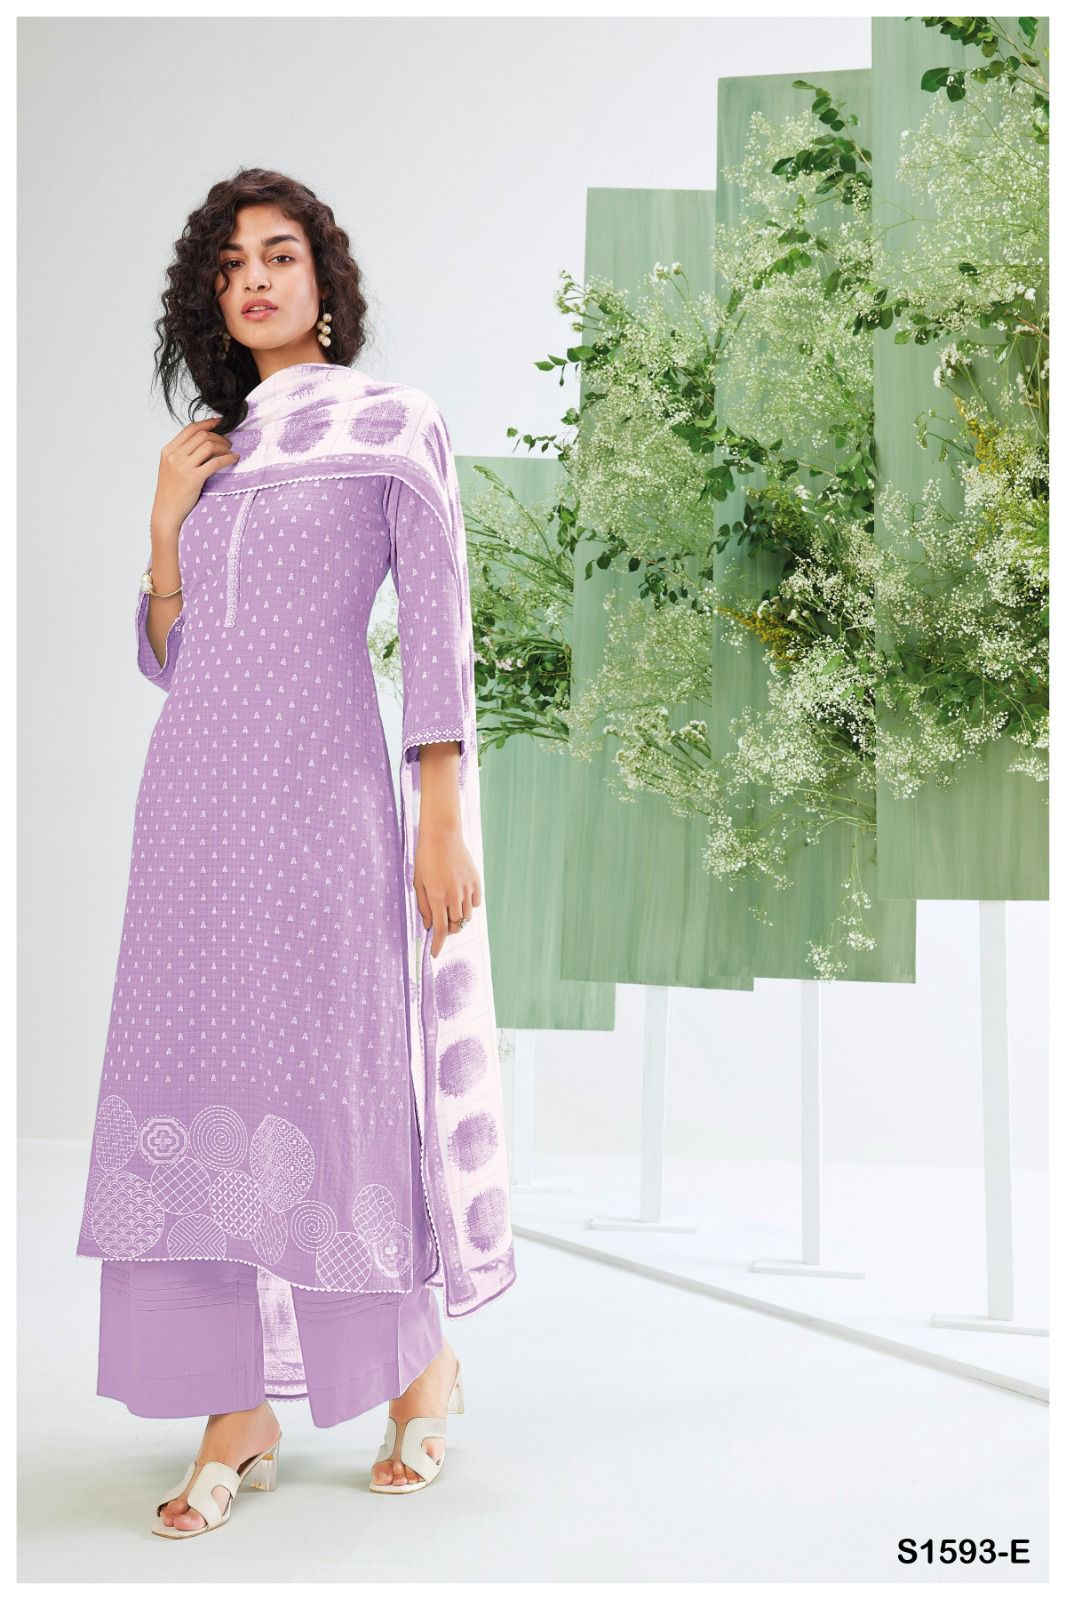 Khushi-1593 Ganga Premium Cotton Plazzo Style Suits